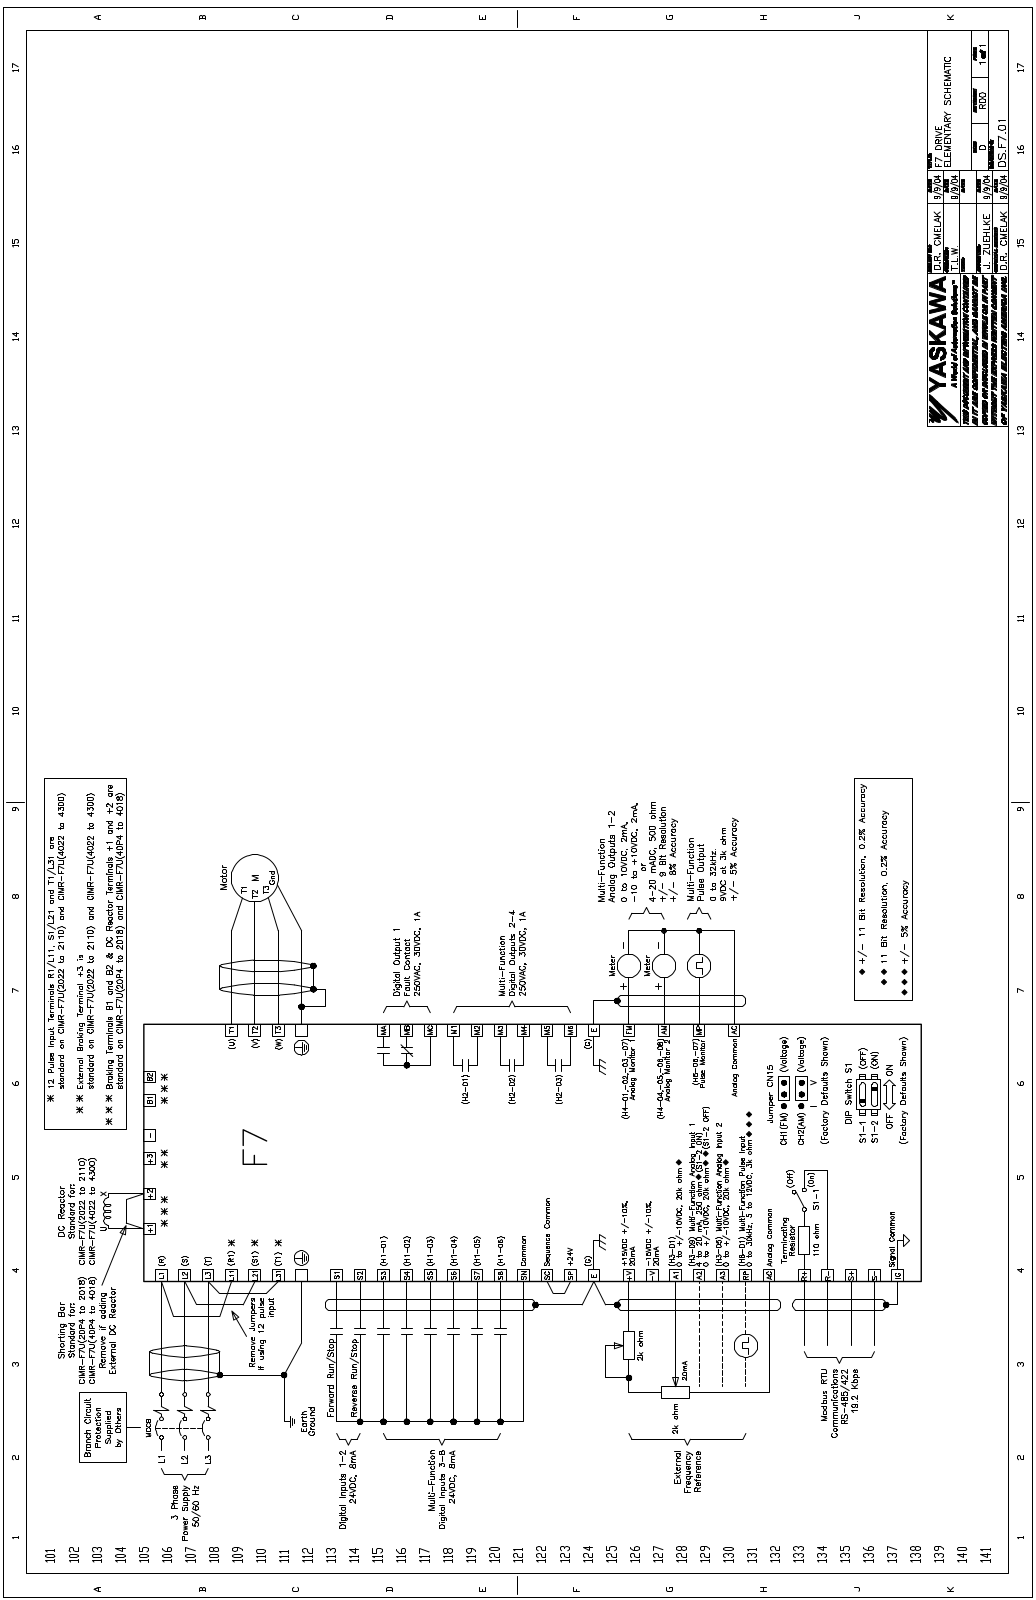 Yaskawa CIMR-F7U Wiring Diagrams